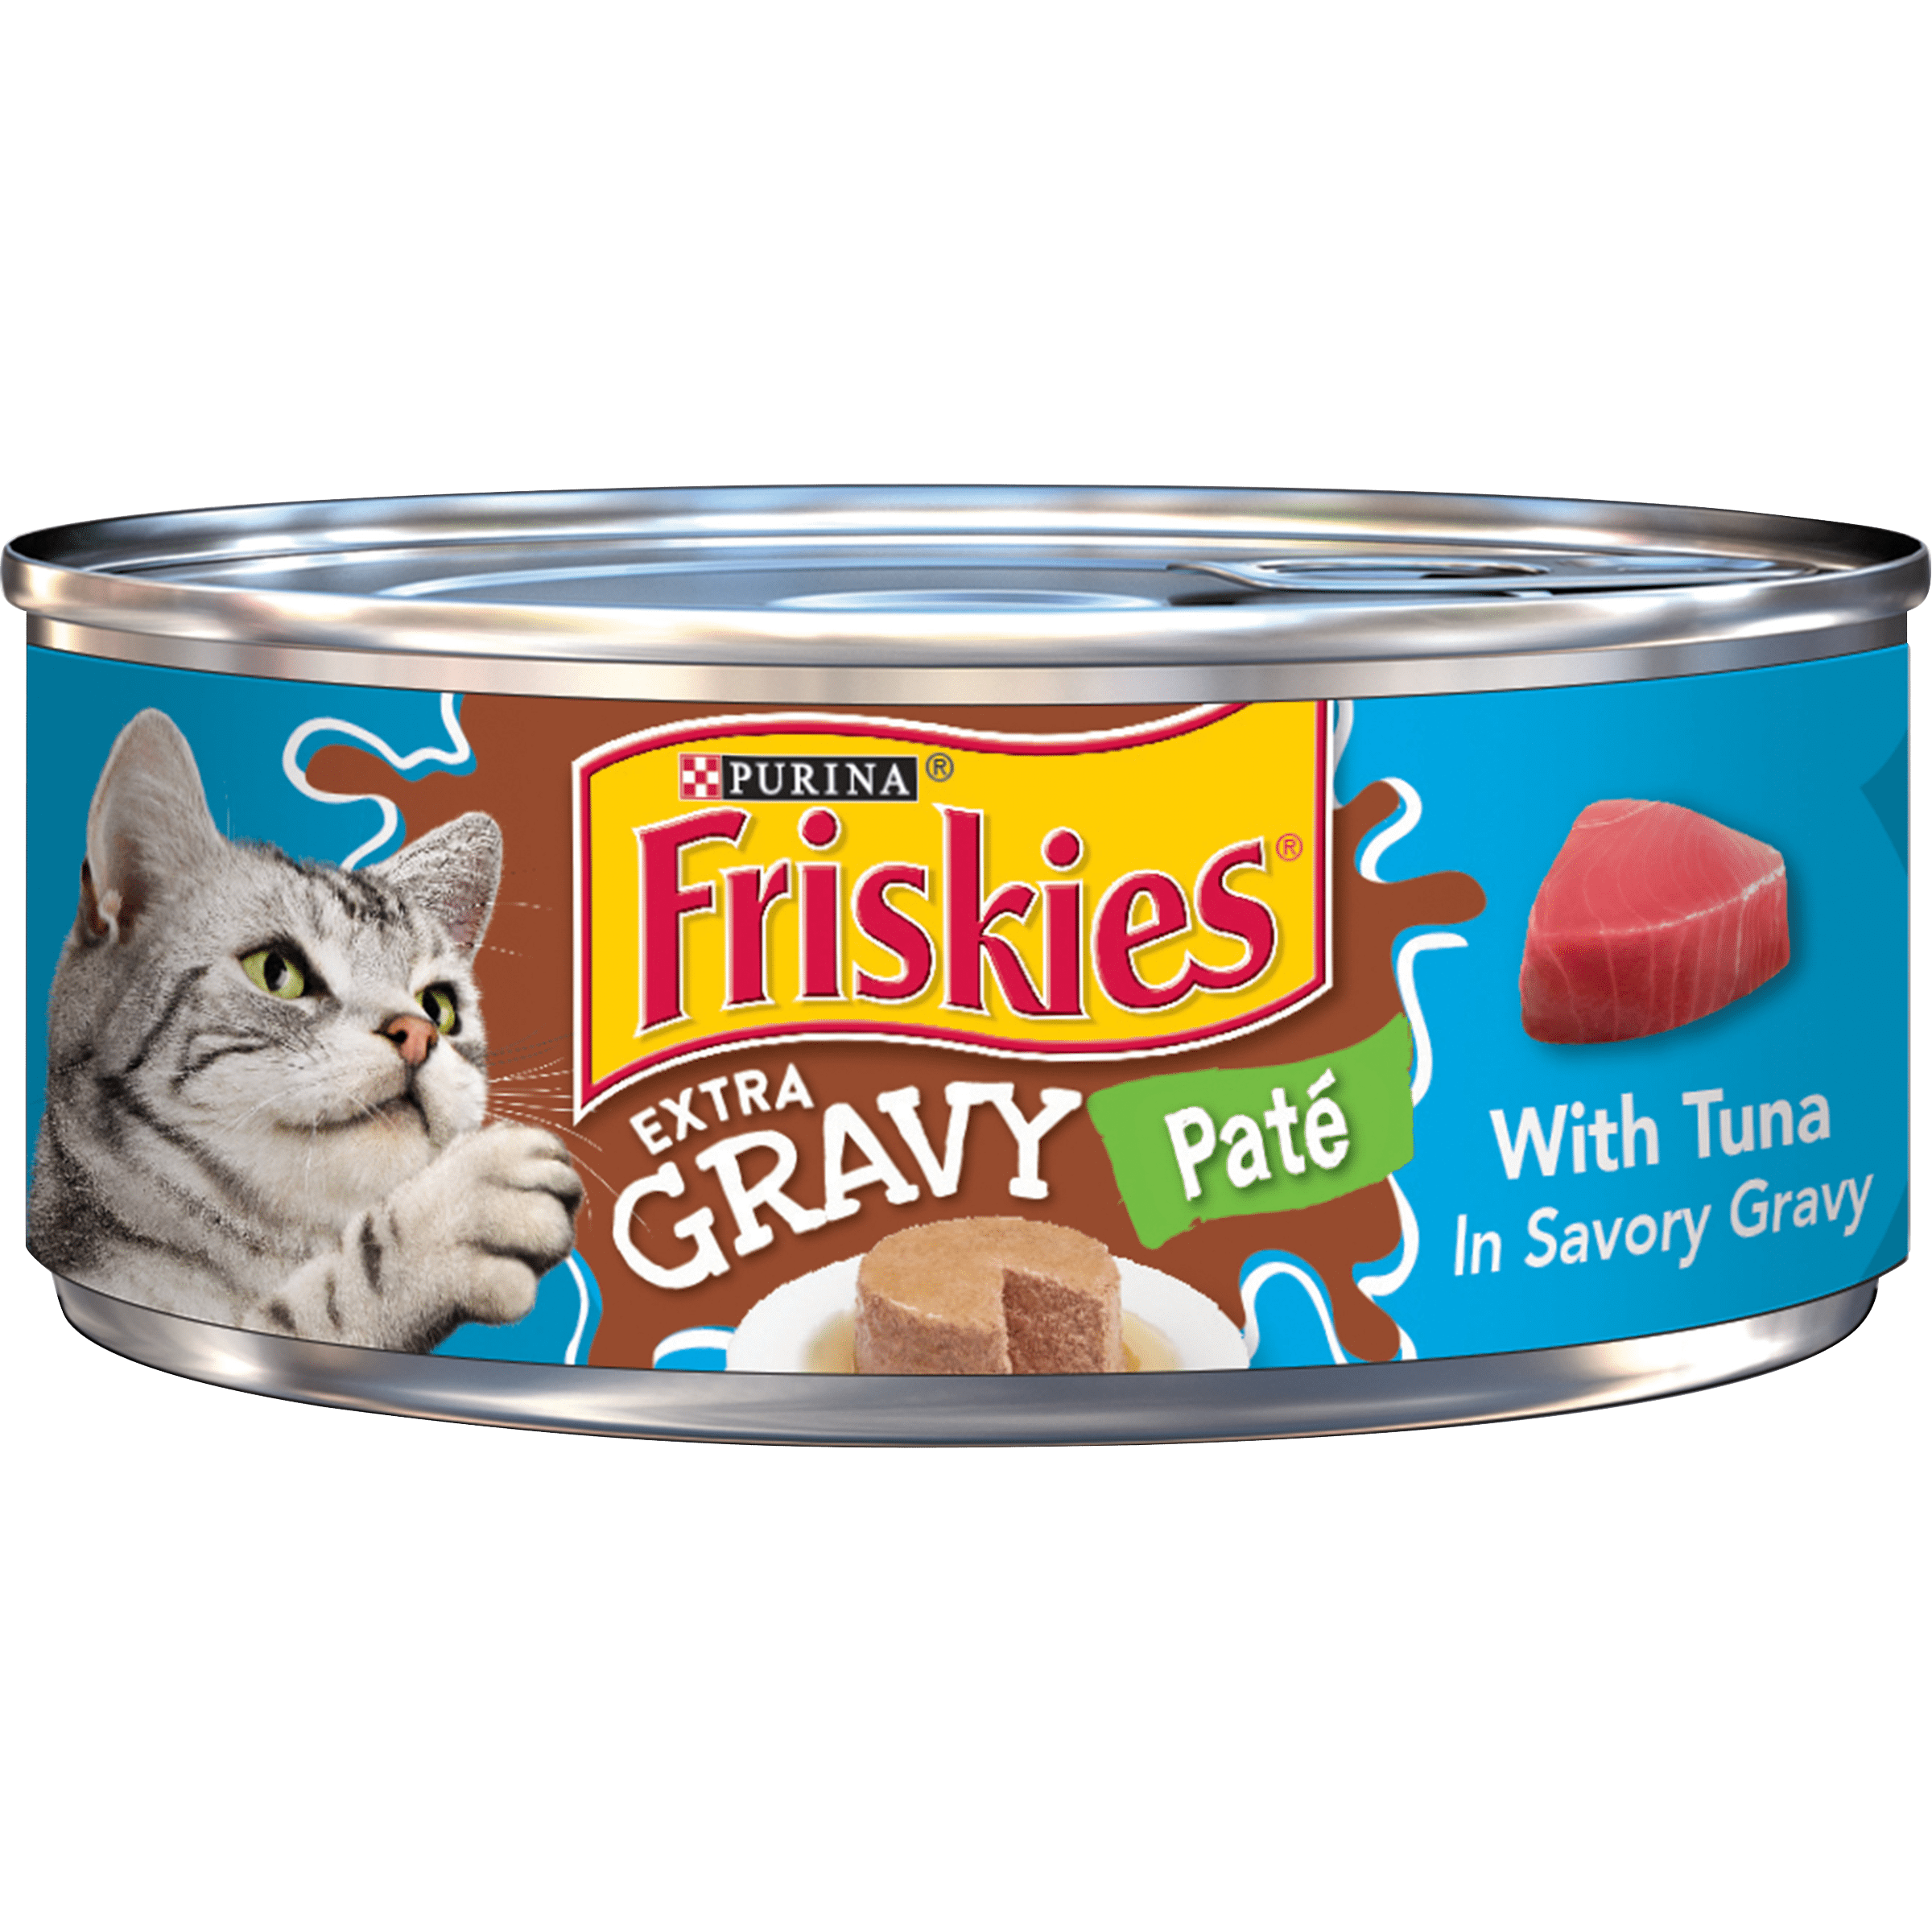 Friskies Gravy Pate Wet Cat Food, Extra Gravy Pate With Tuna in Savory